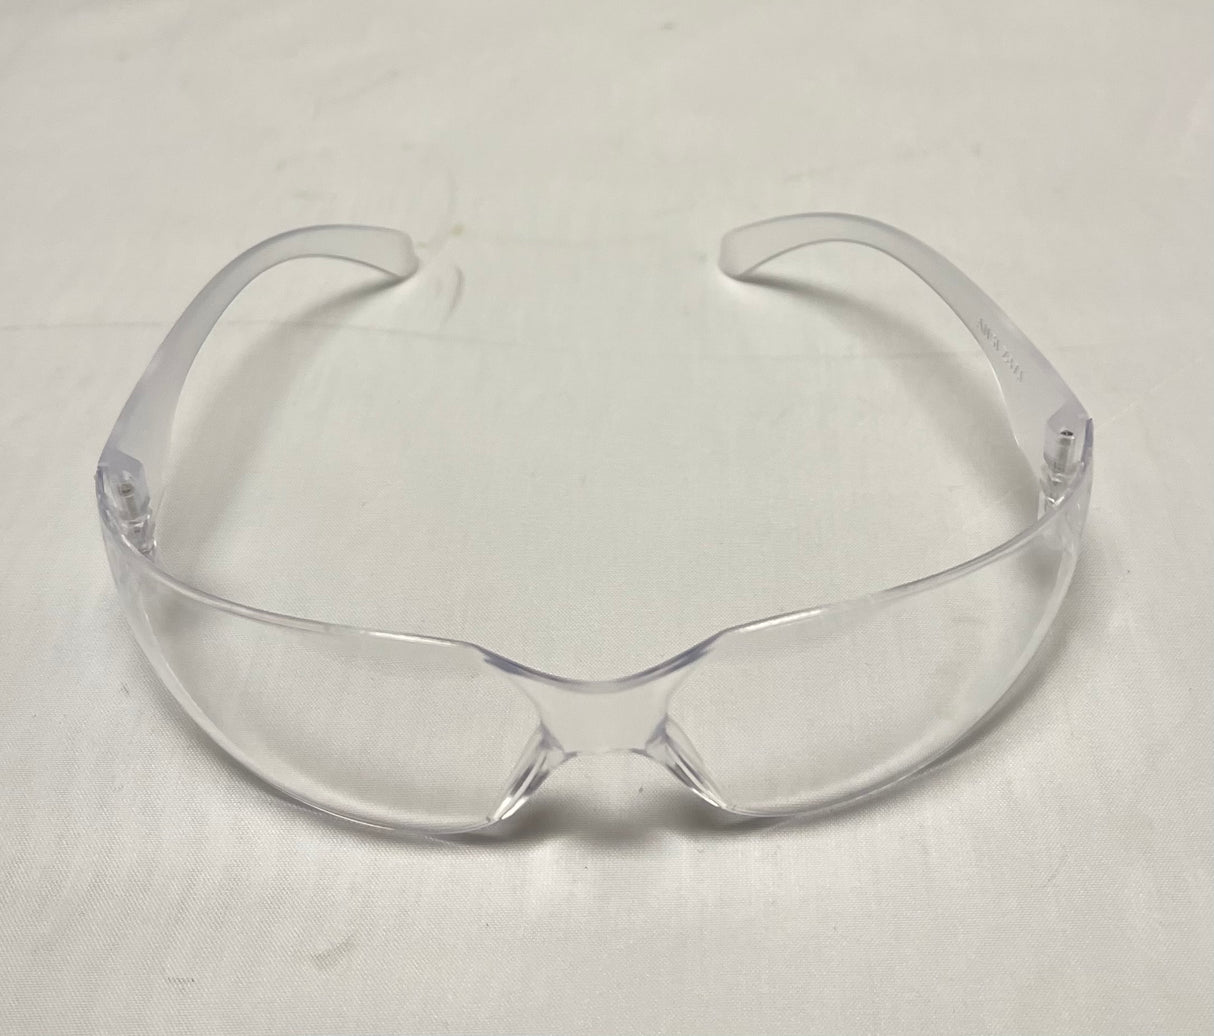 Co2 laser safe ClearView Safety Glasses